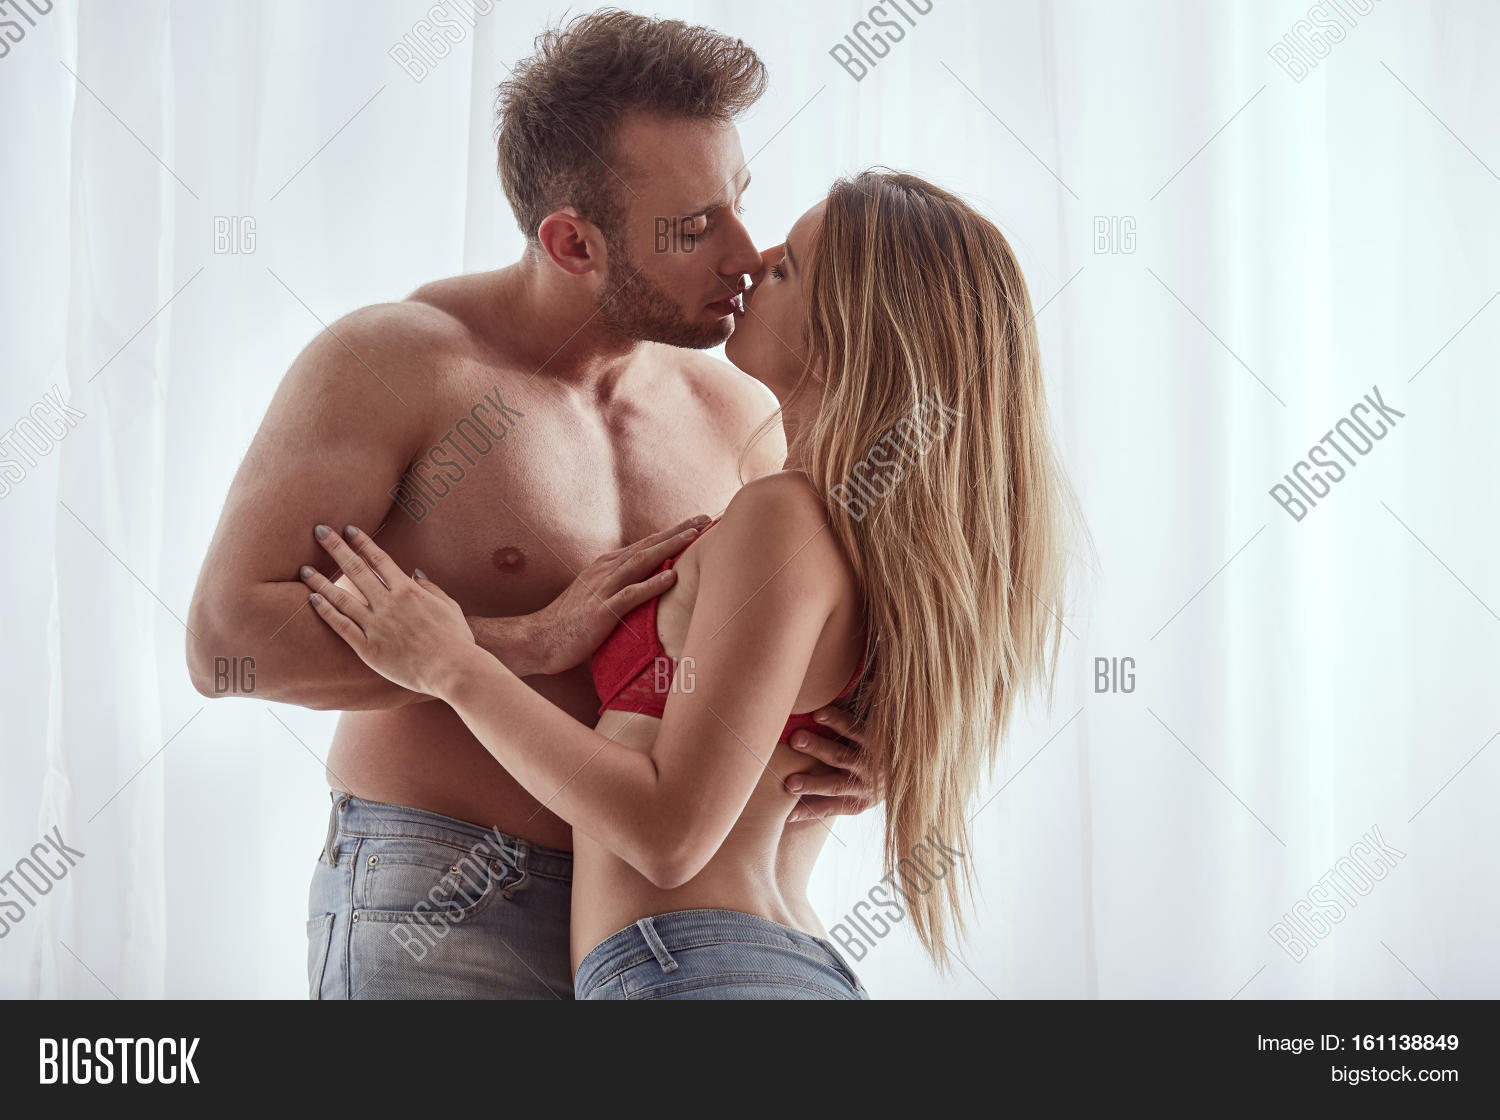 bryant harrington share hot women kissing men photos